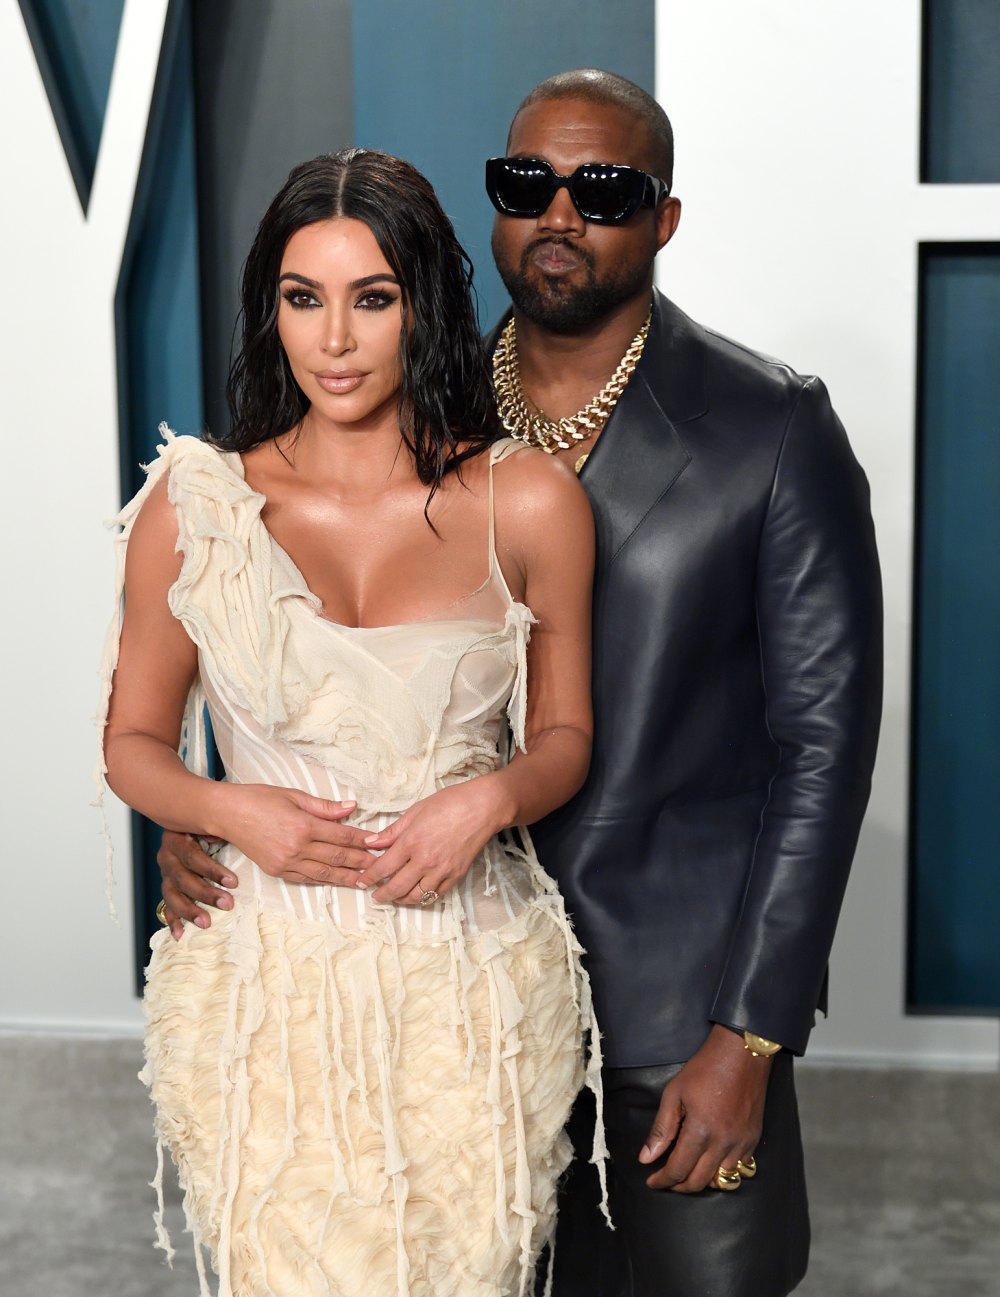 Kim Kardashian Was Scared to Tell Kanye West About Their Kids Male Nanny